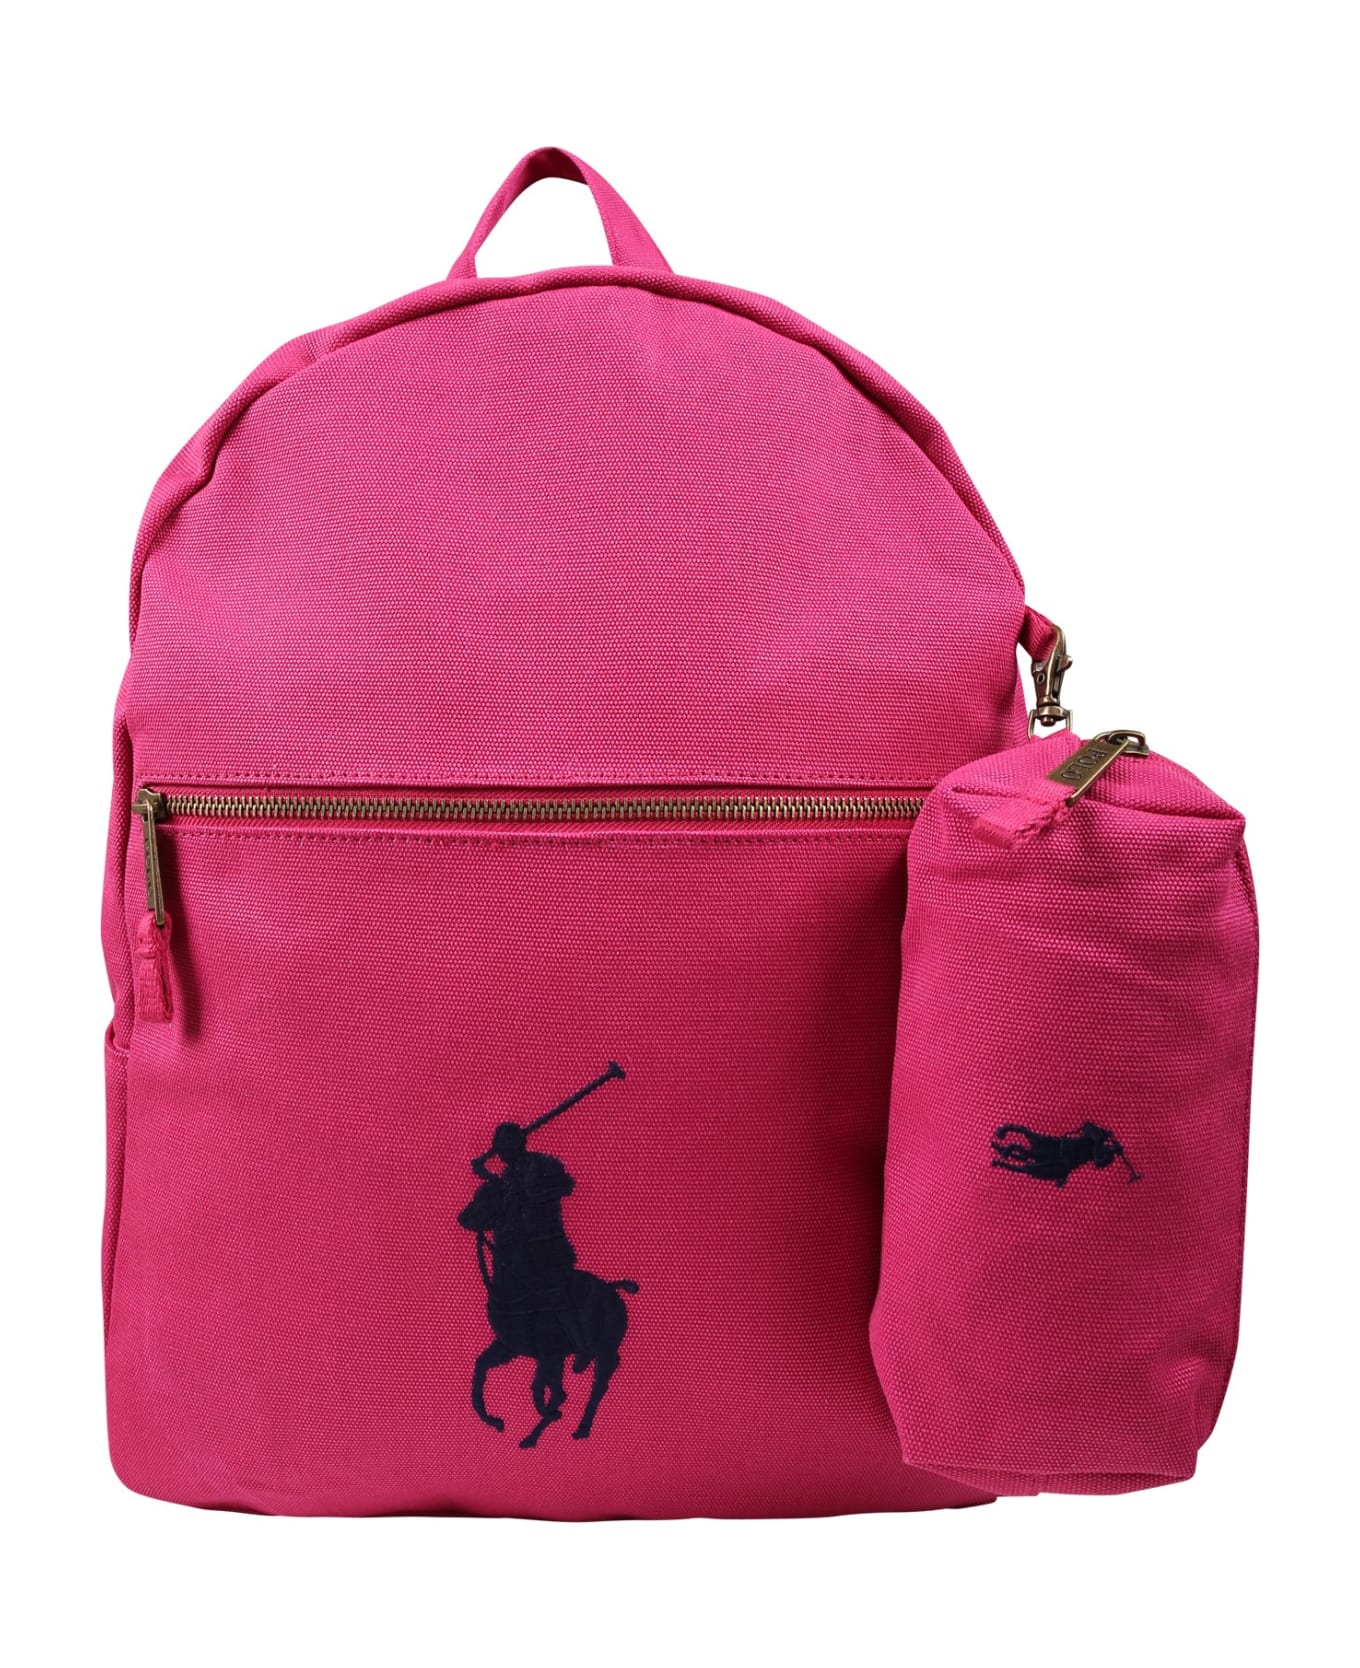 Ralph Lauren Fuchsia Backpack For Girs With Logo - Fuchsia